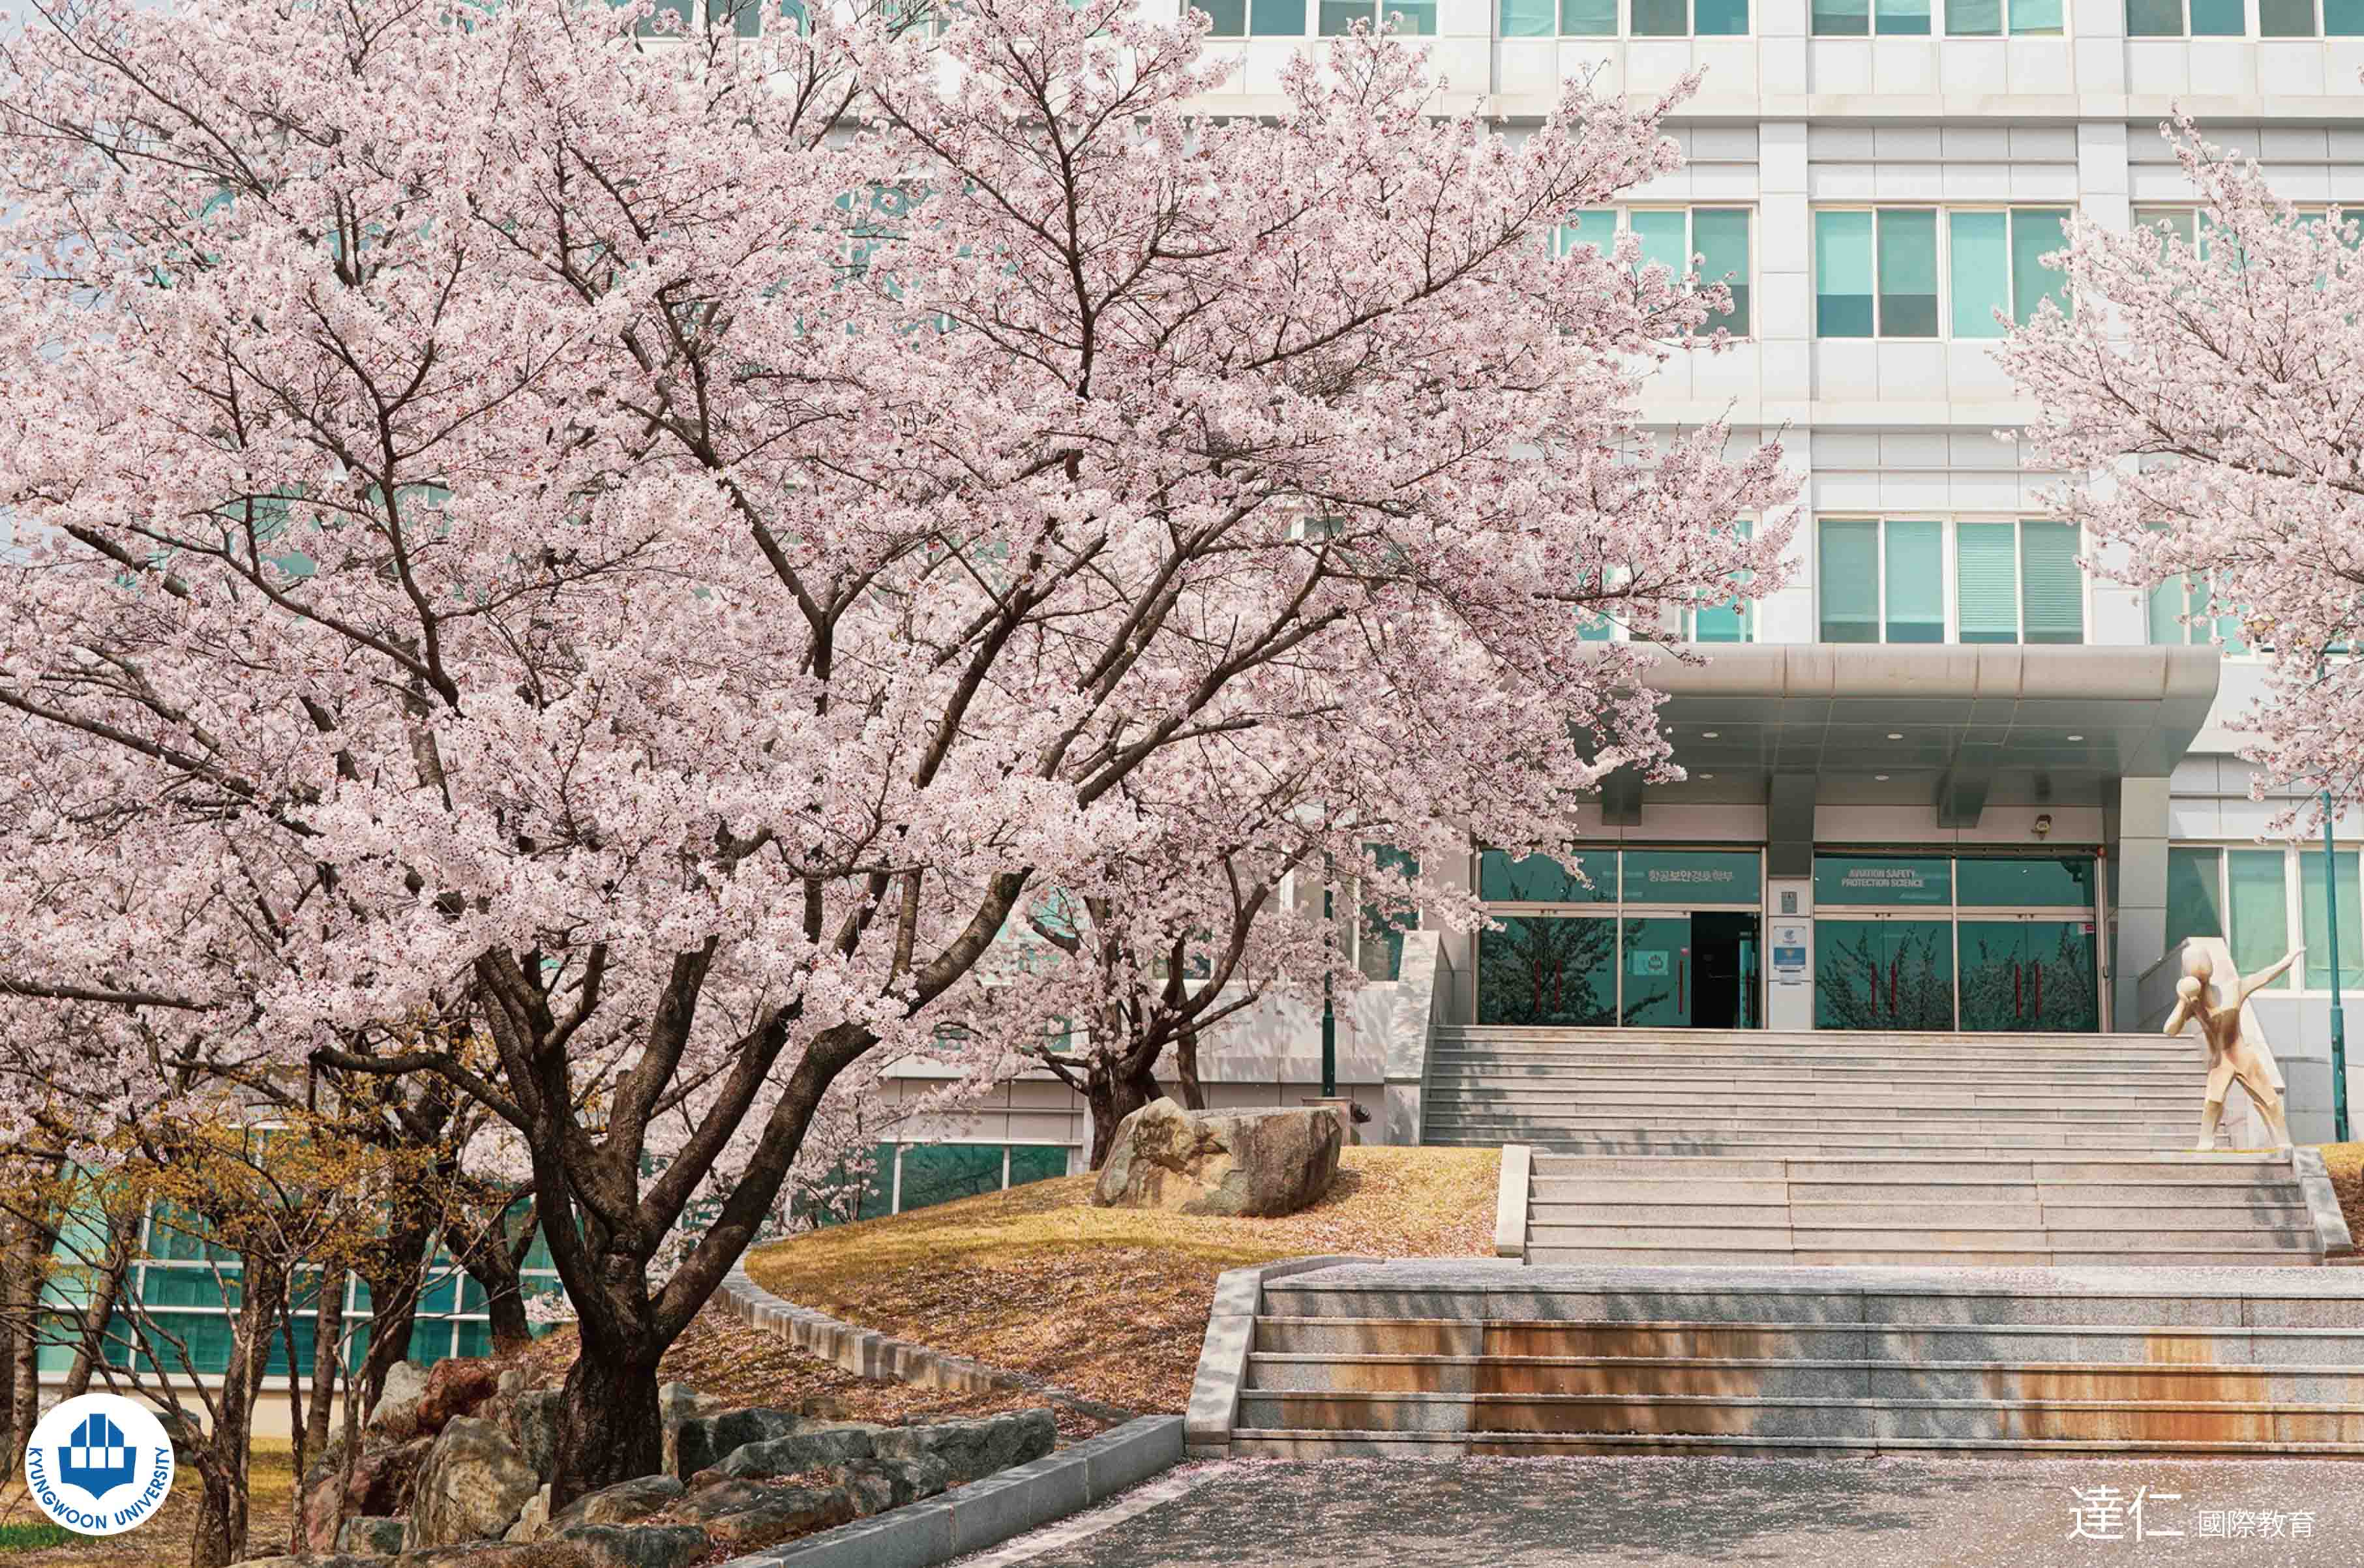 慶雲大學 Kyungwoon University